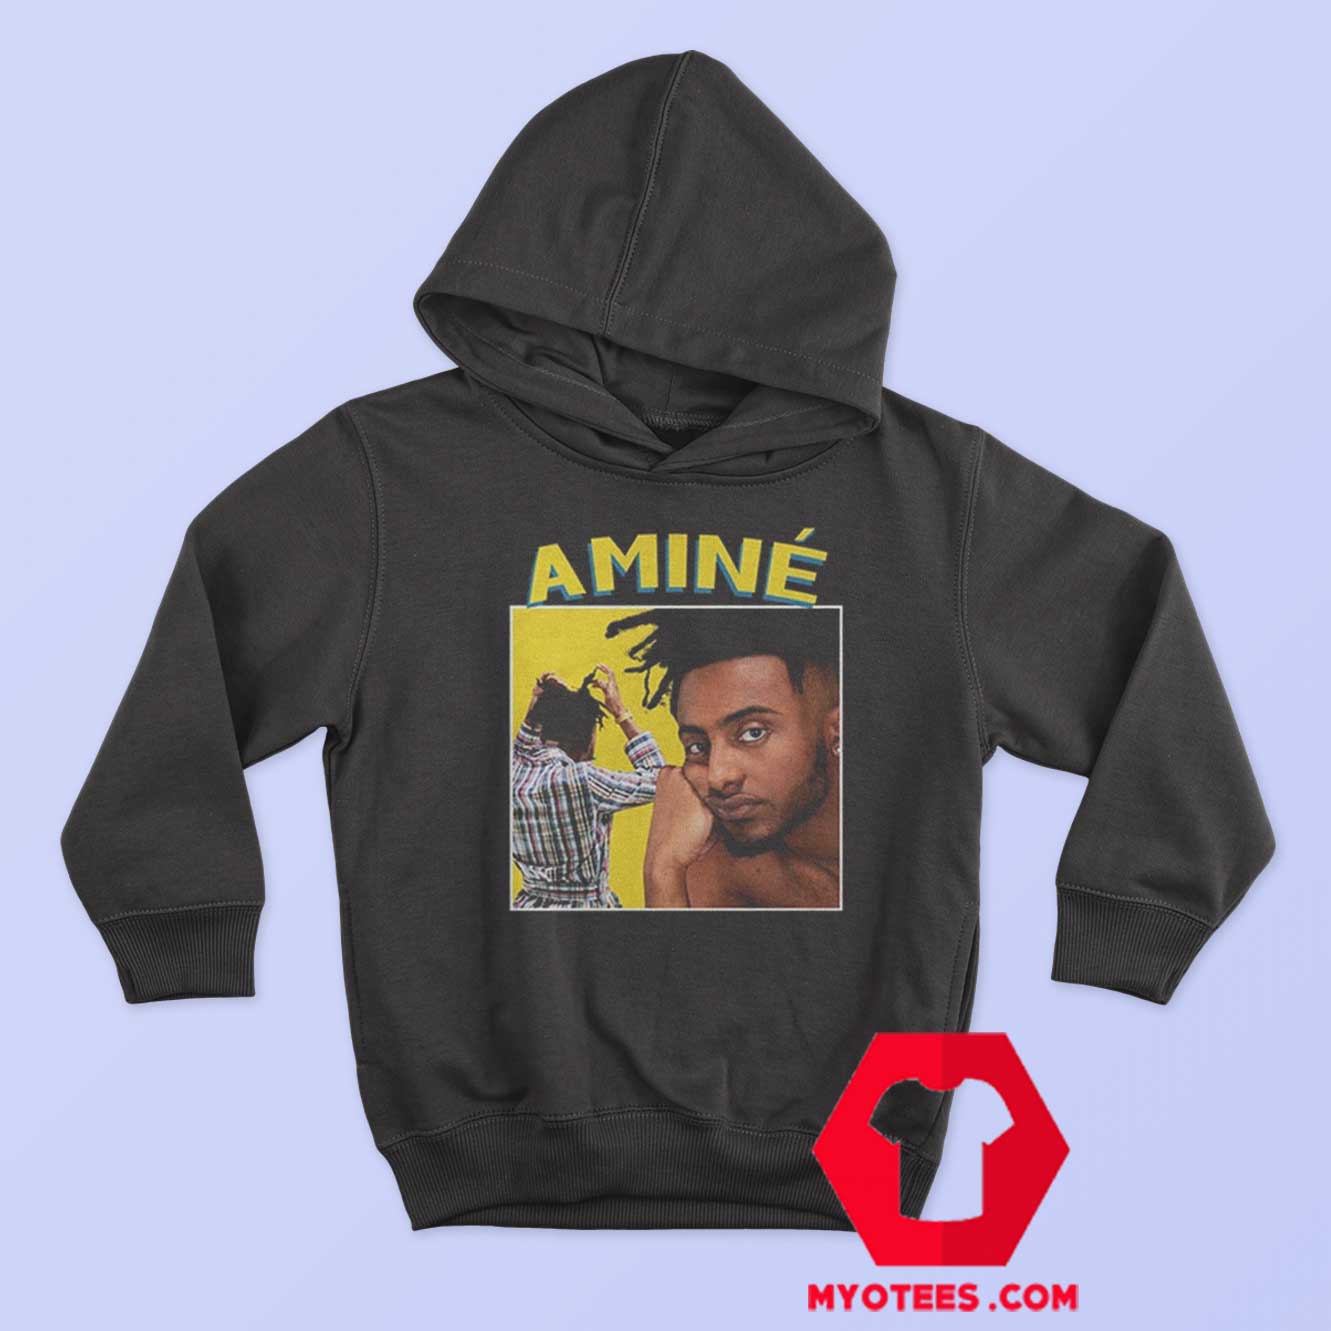 Amine Vintage 90s Homage Retro Rapper T-Shirt